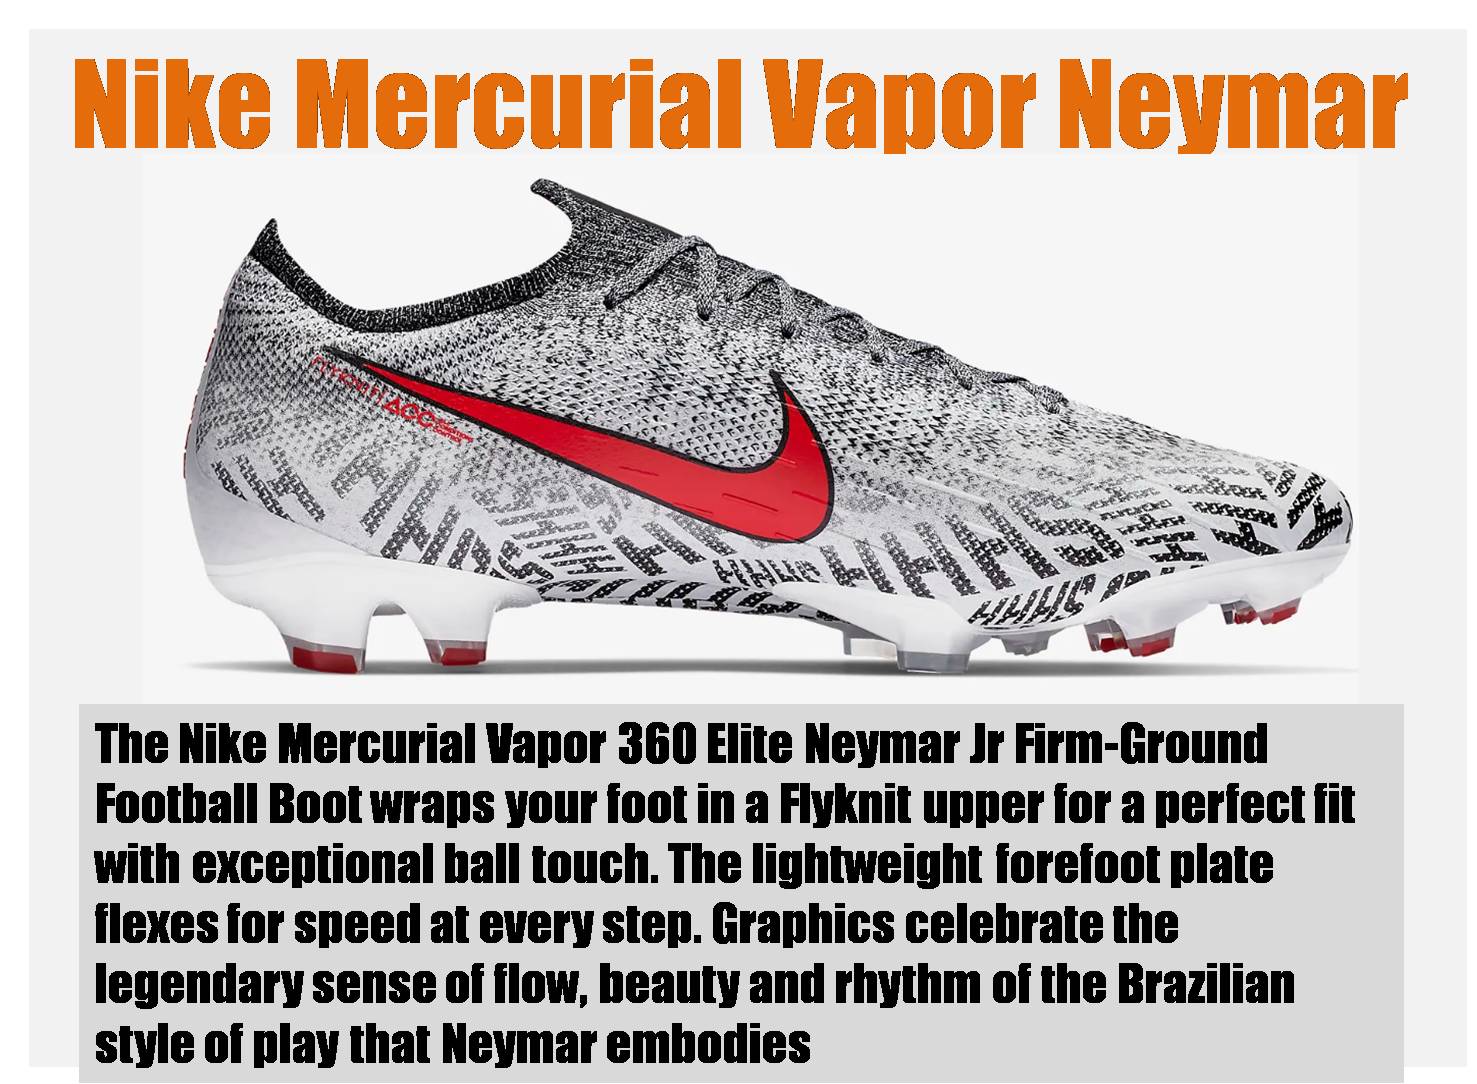 Nike_Mercurial_Vapor_Neymar_football_Shoes_Review_01